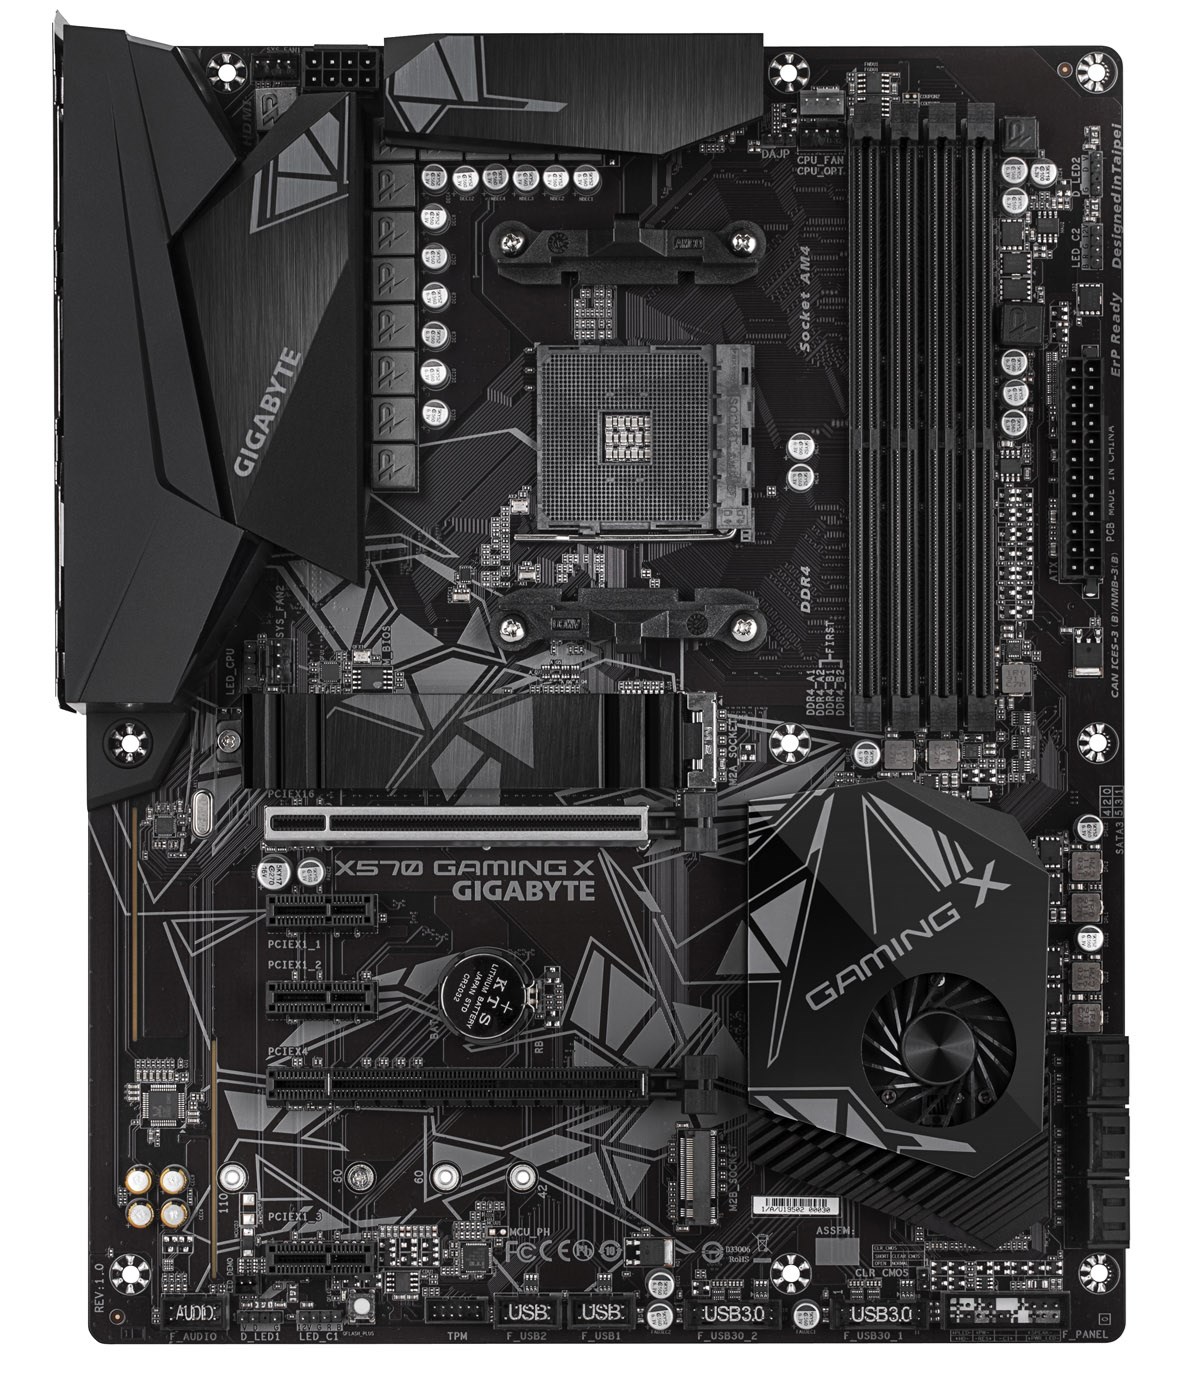 Gigabyte X570 GAMING X AMD Socket AM4 X570 Chipset ATX Motherboard